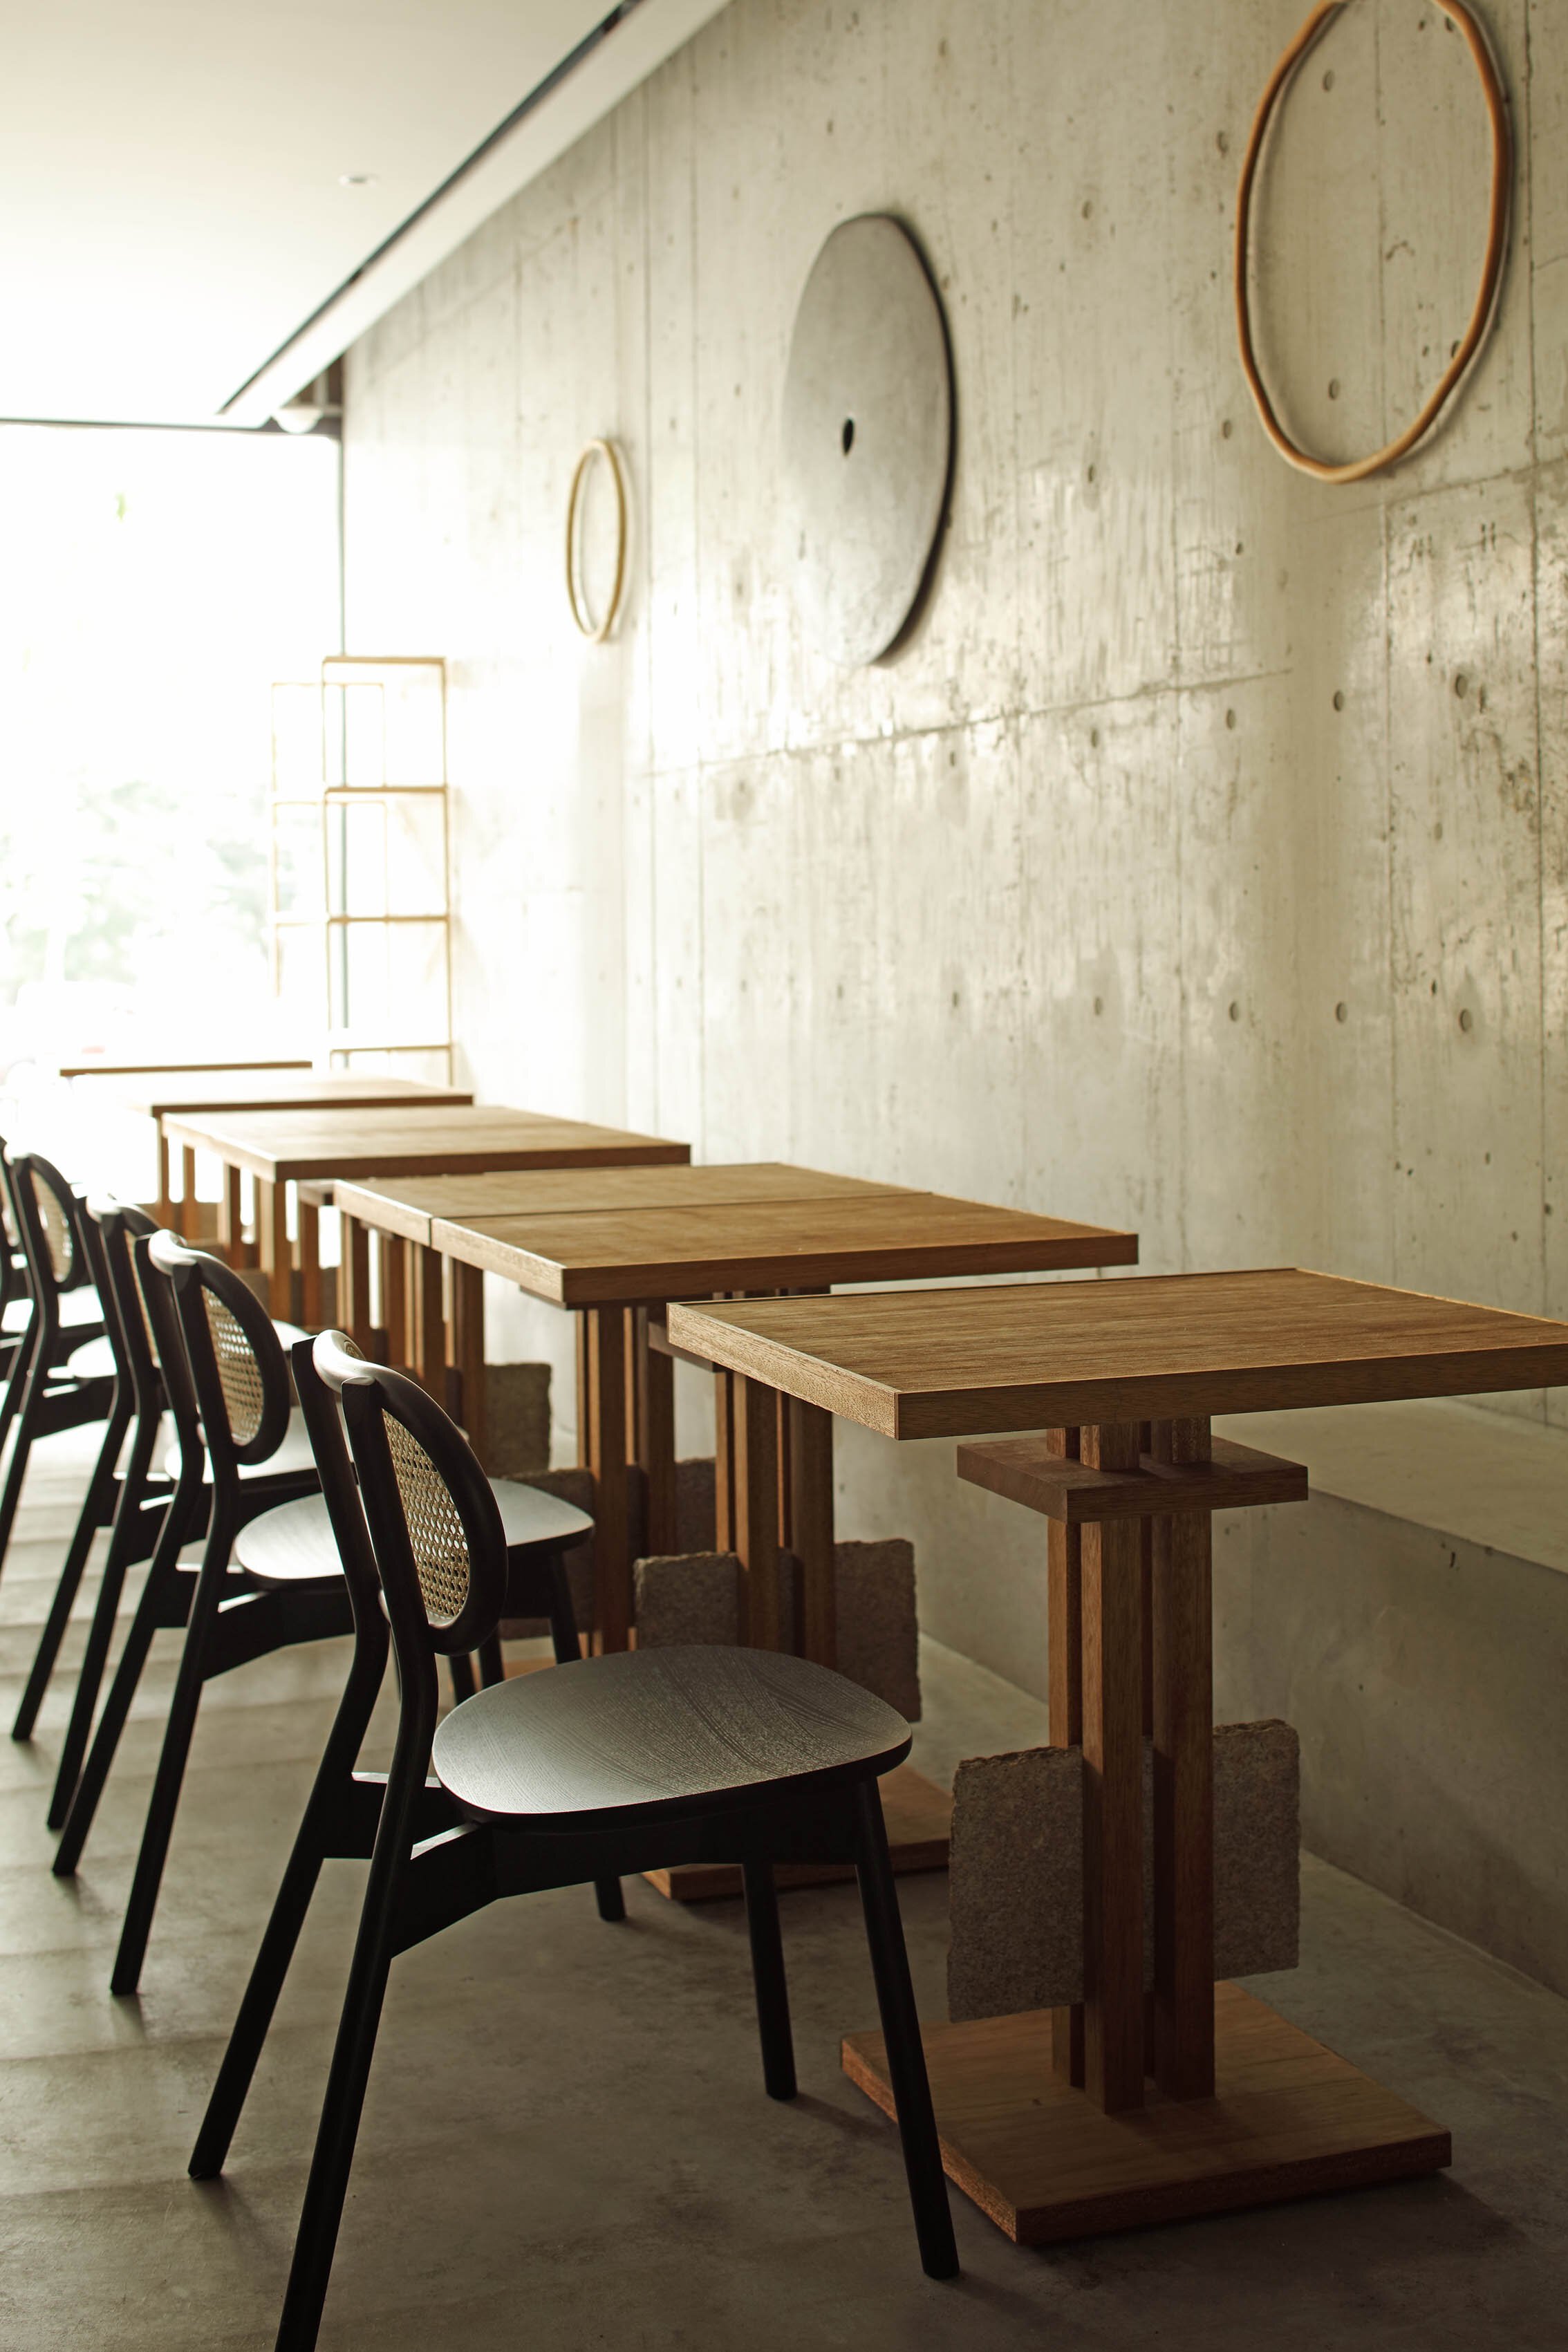  Yusuke Seki Studioの関祐介がデザインしたカフェOgawa Coffee Laboratoryのテーブル席 